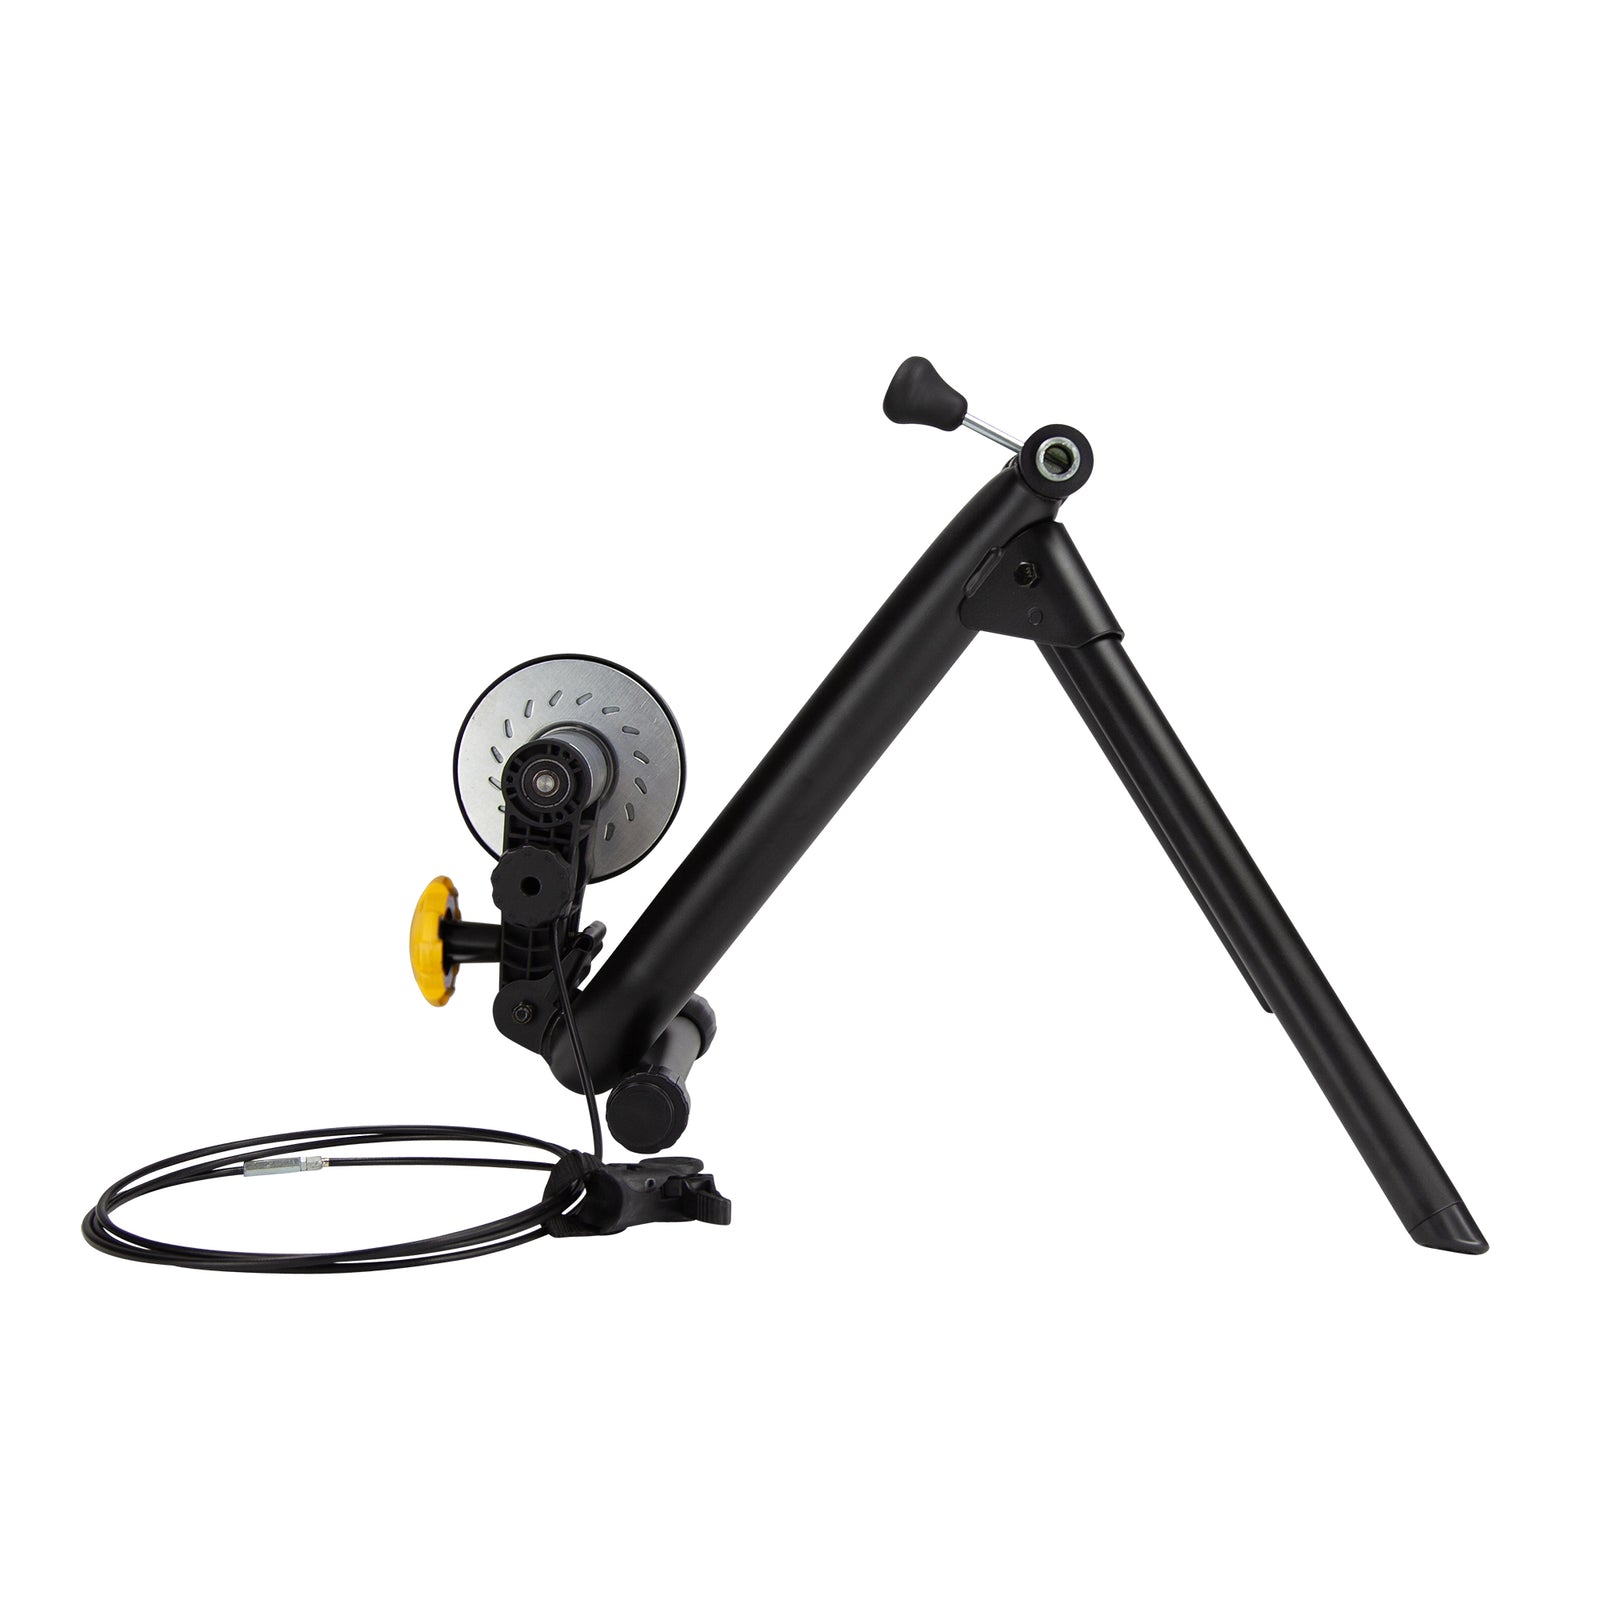 Saris Mag+ Bike Trainer Stand, Foldable Magnetic Resistance Indoor Bike Trainer, Black - image 4 of 7